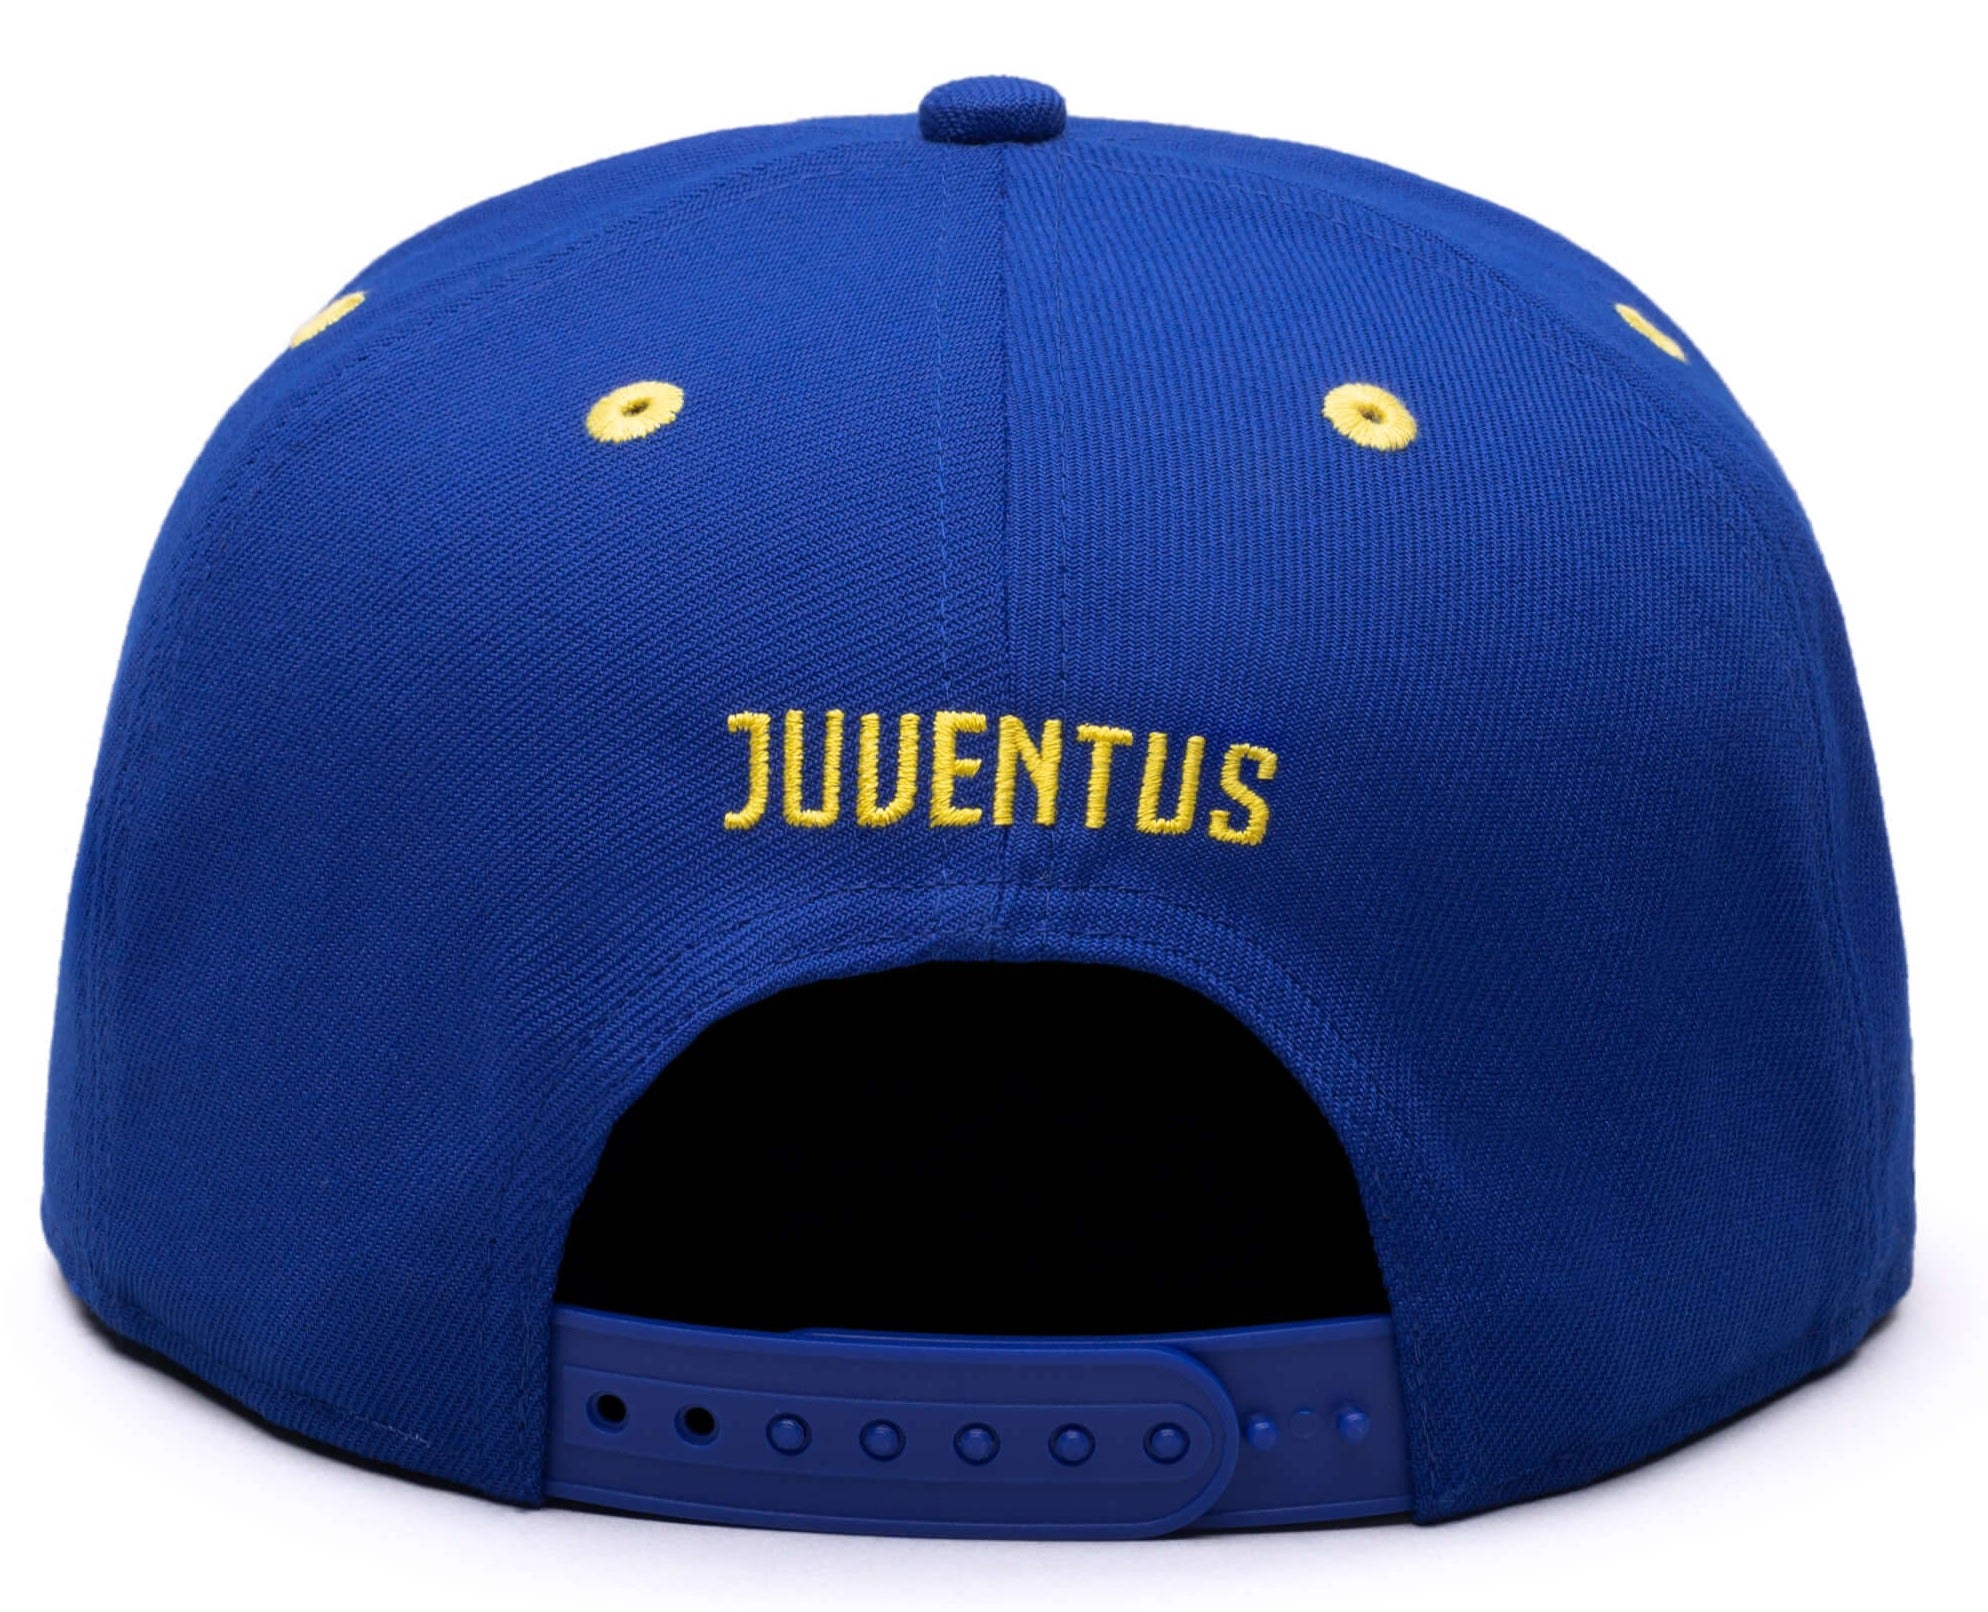 FI COLLECTION JUVENTUS RETRO CAPSULE SNAPBACK HAT-CALMING BLUE